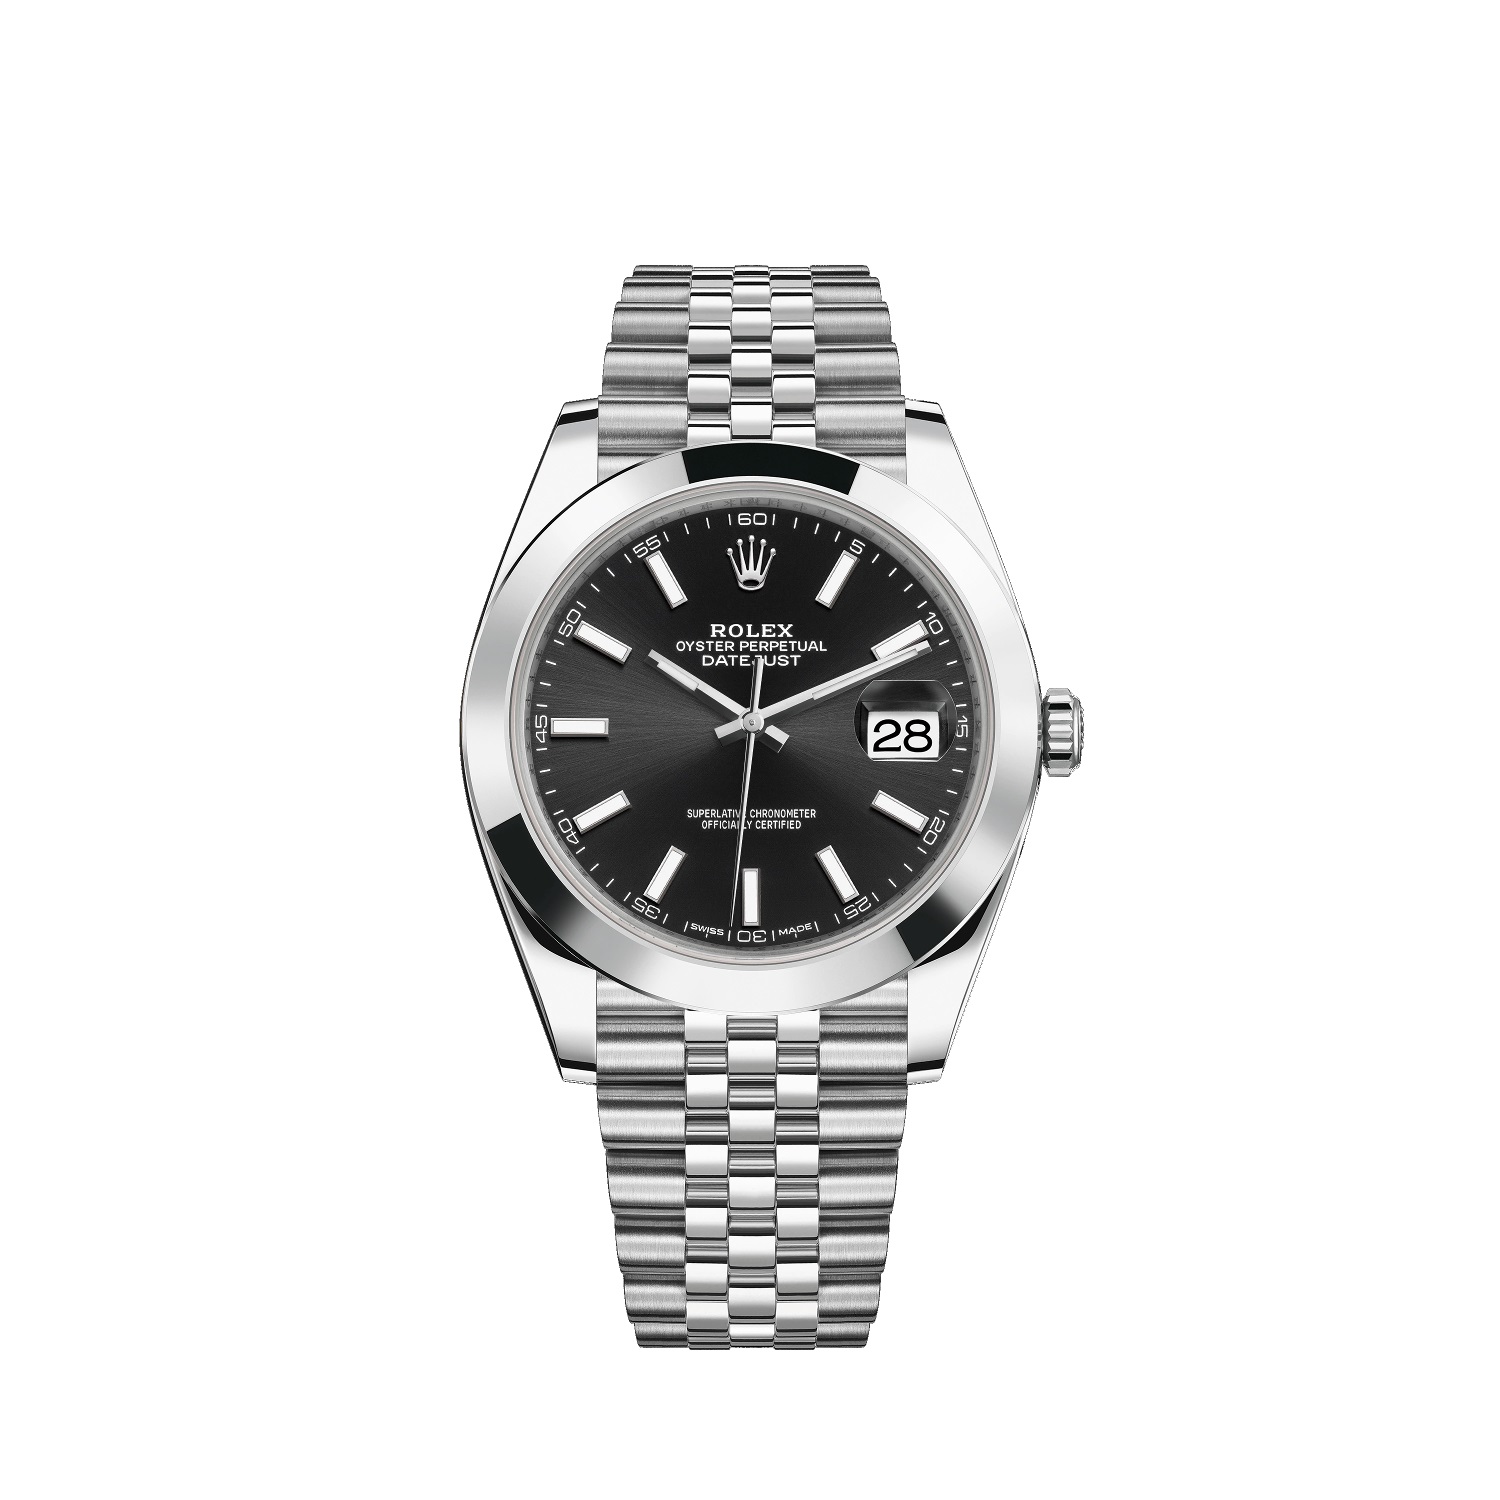 Datejust 41 126300 Stainless Steel Watch (Black)